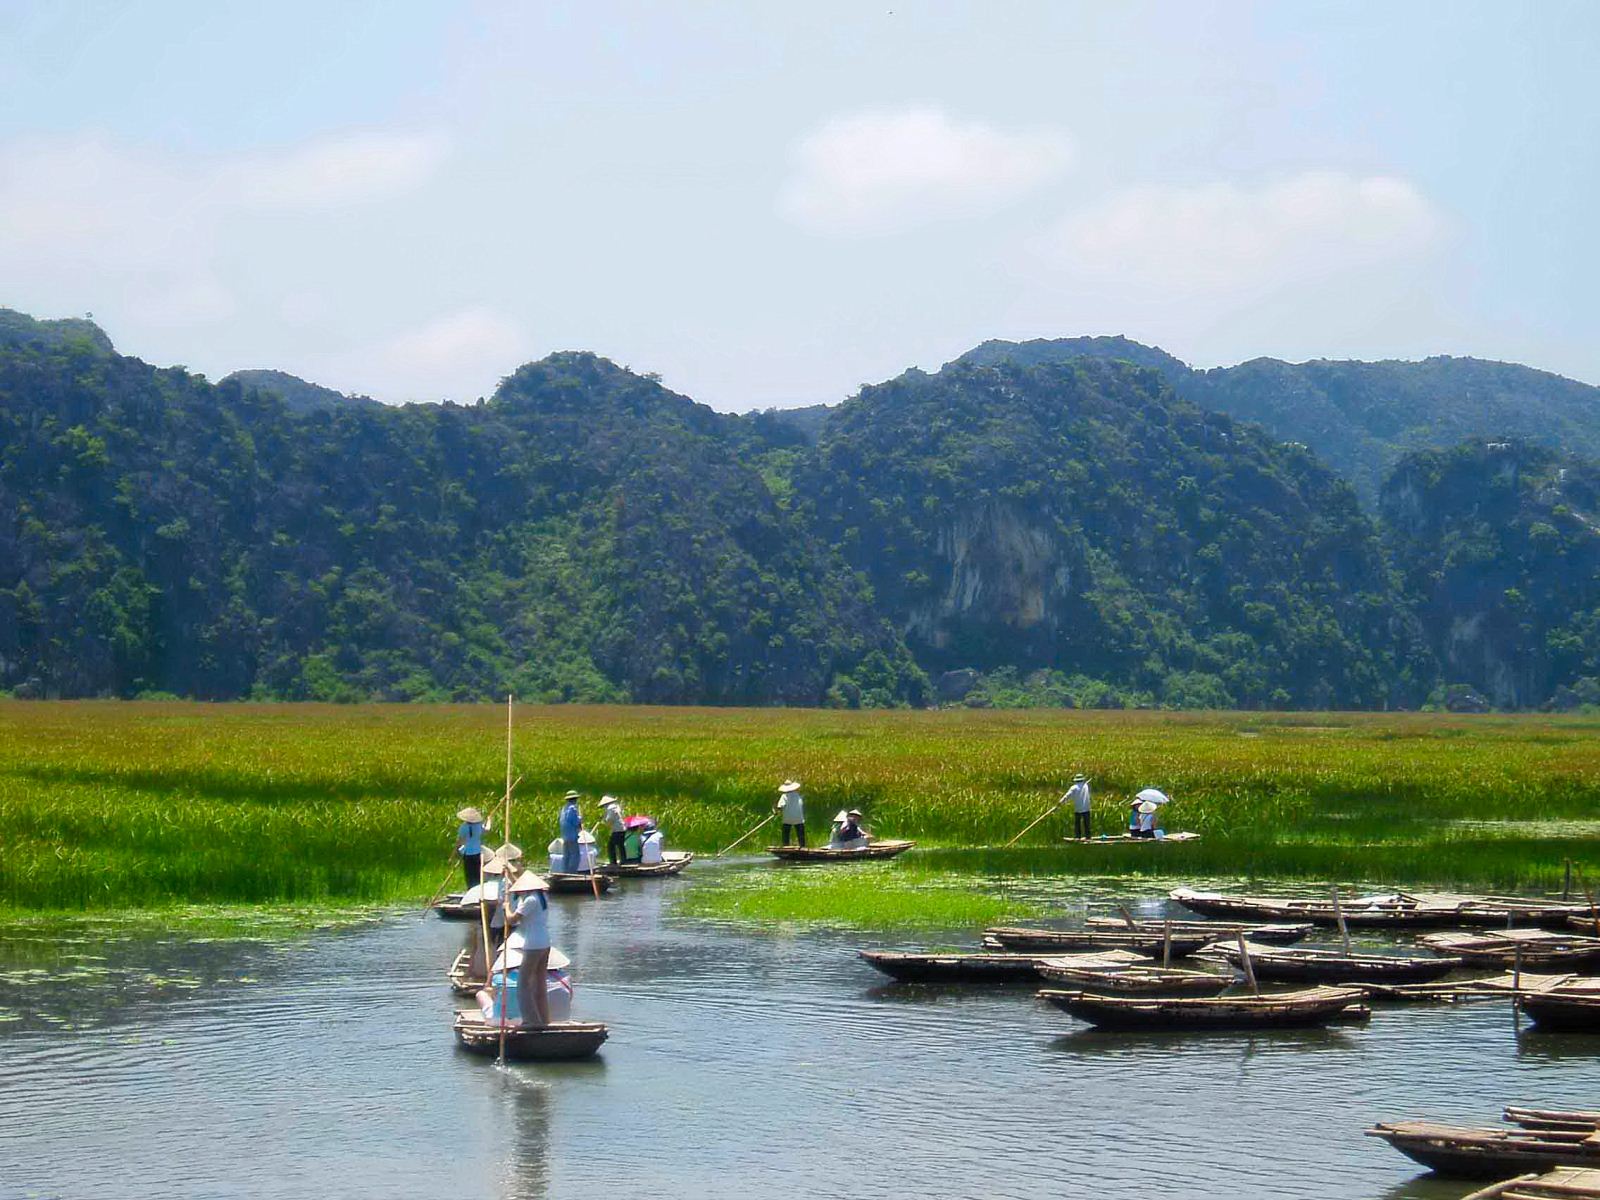 Kenh Ga Floating Village - destination can not miss in Ninh Binh, Vietnam